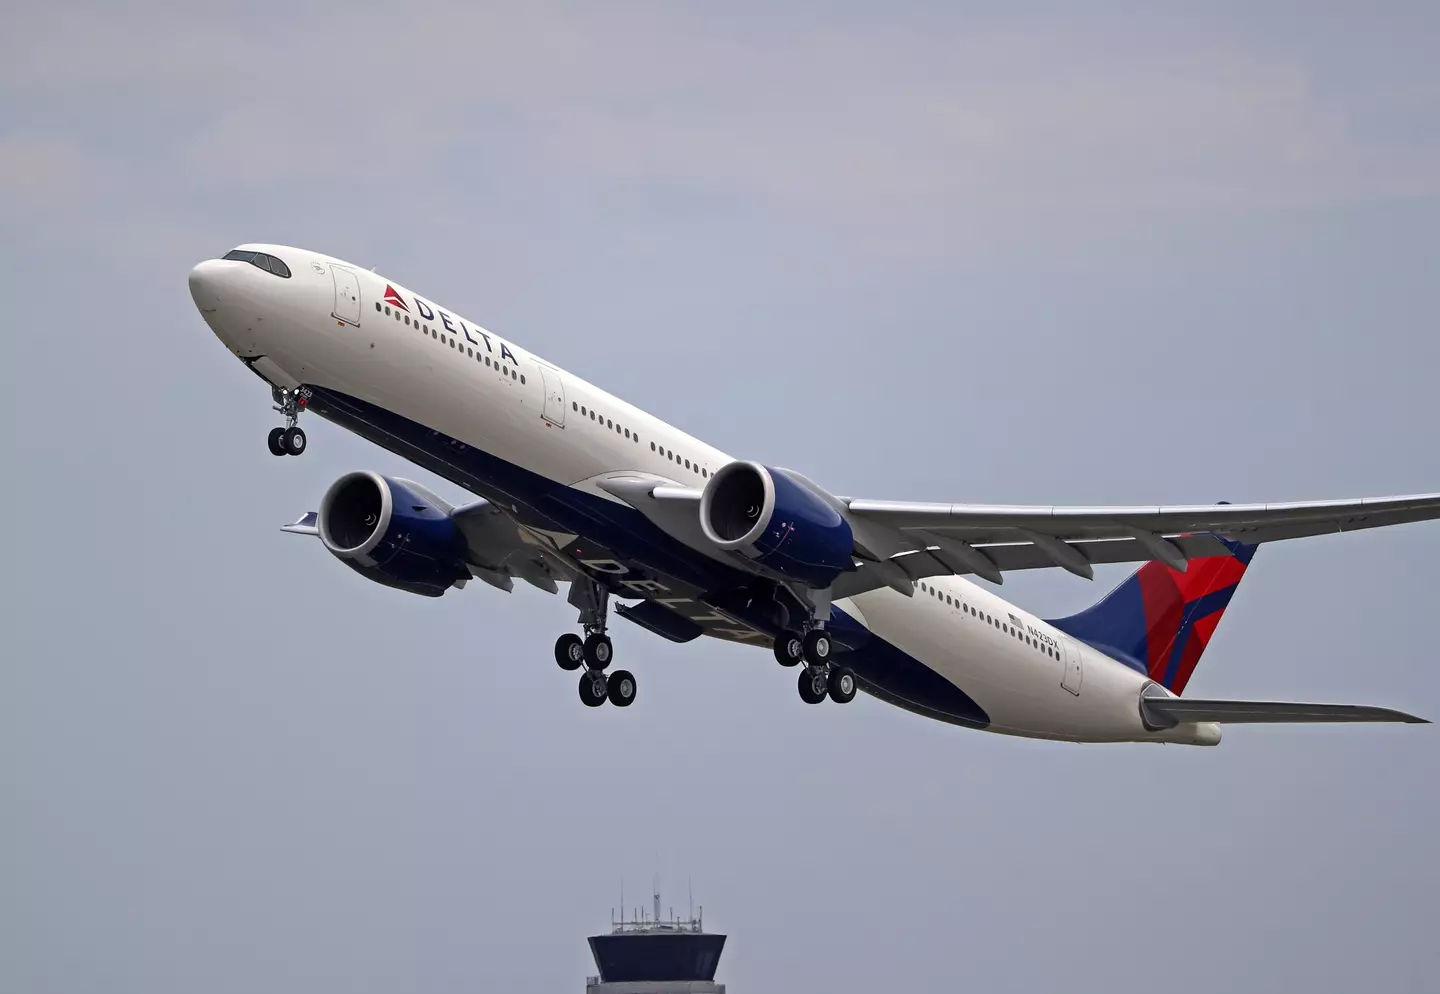 The Delta flight had to return to Atlanta following the explosion.